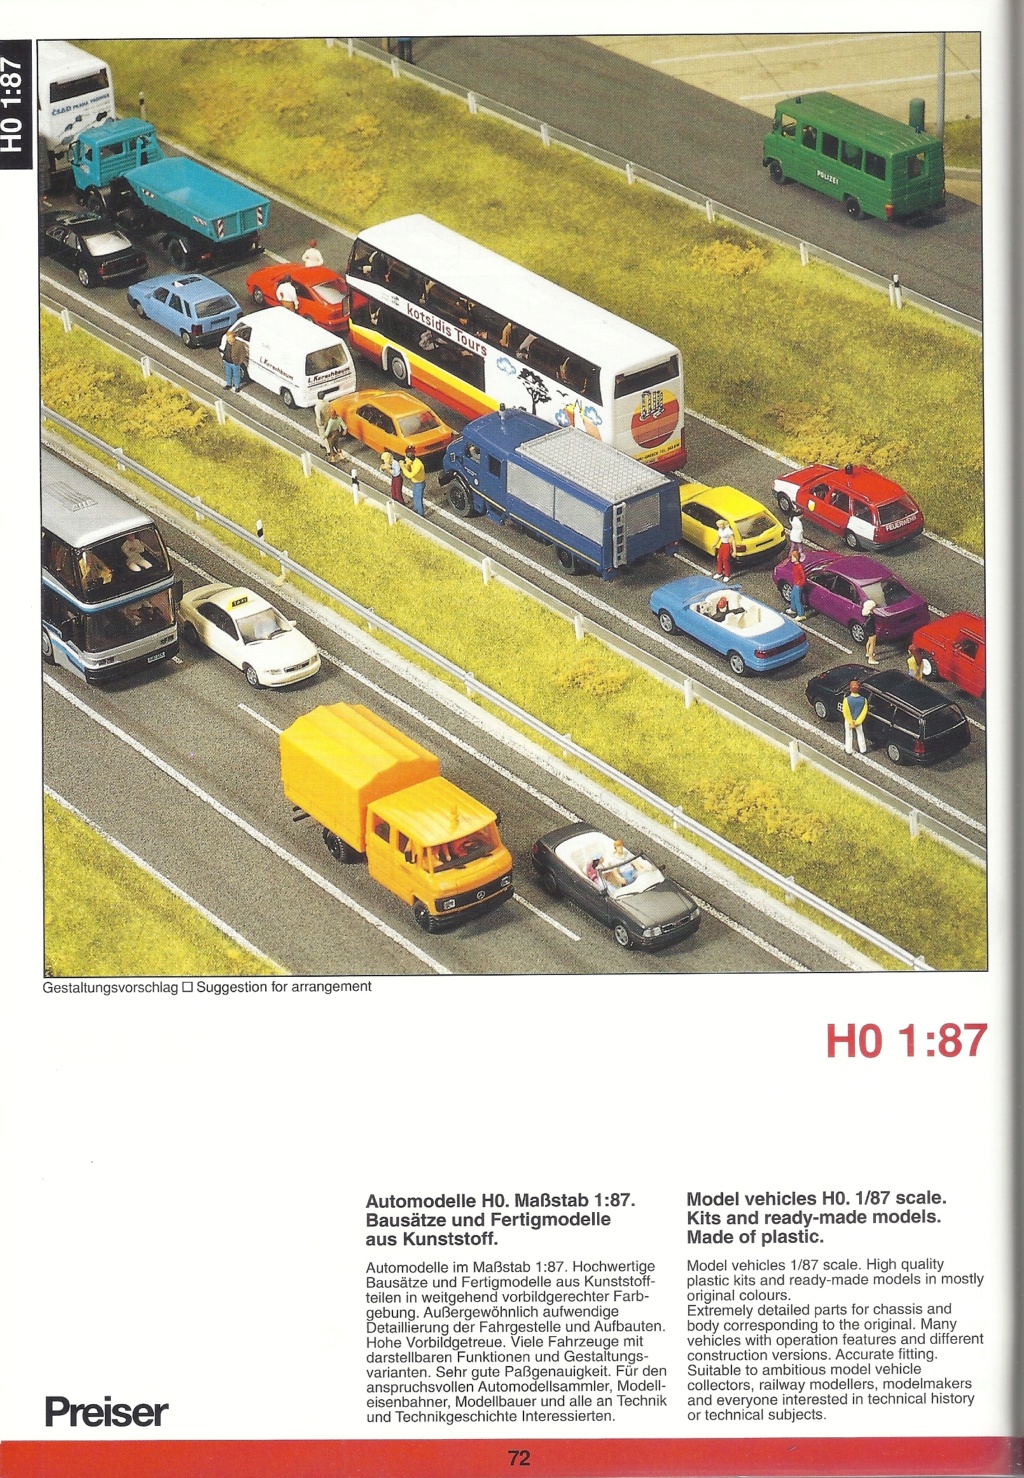 preiser - [PREISER 1996] Catalogue K22 1996 Preis962